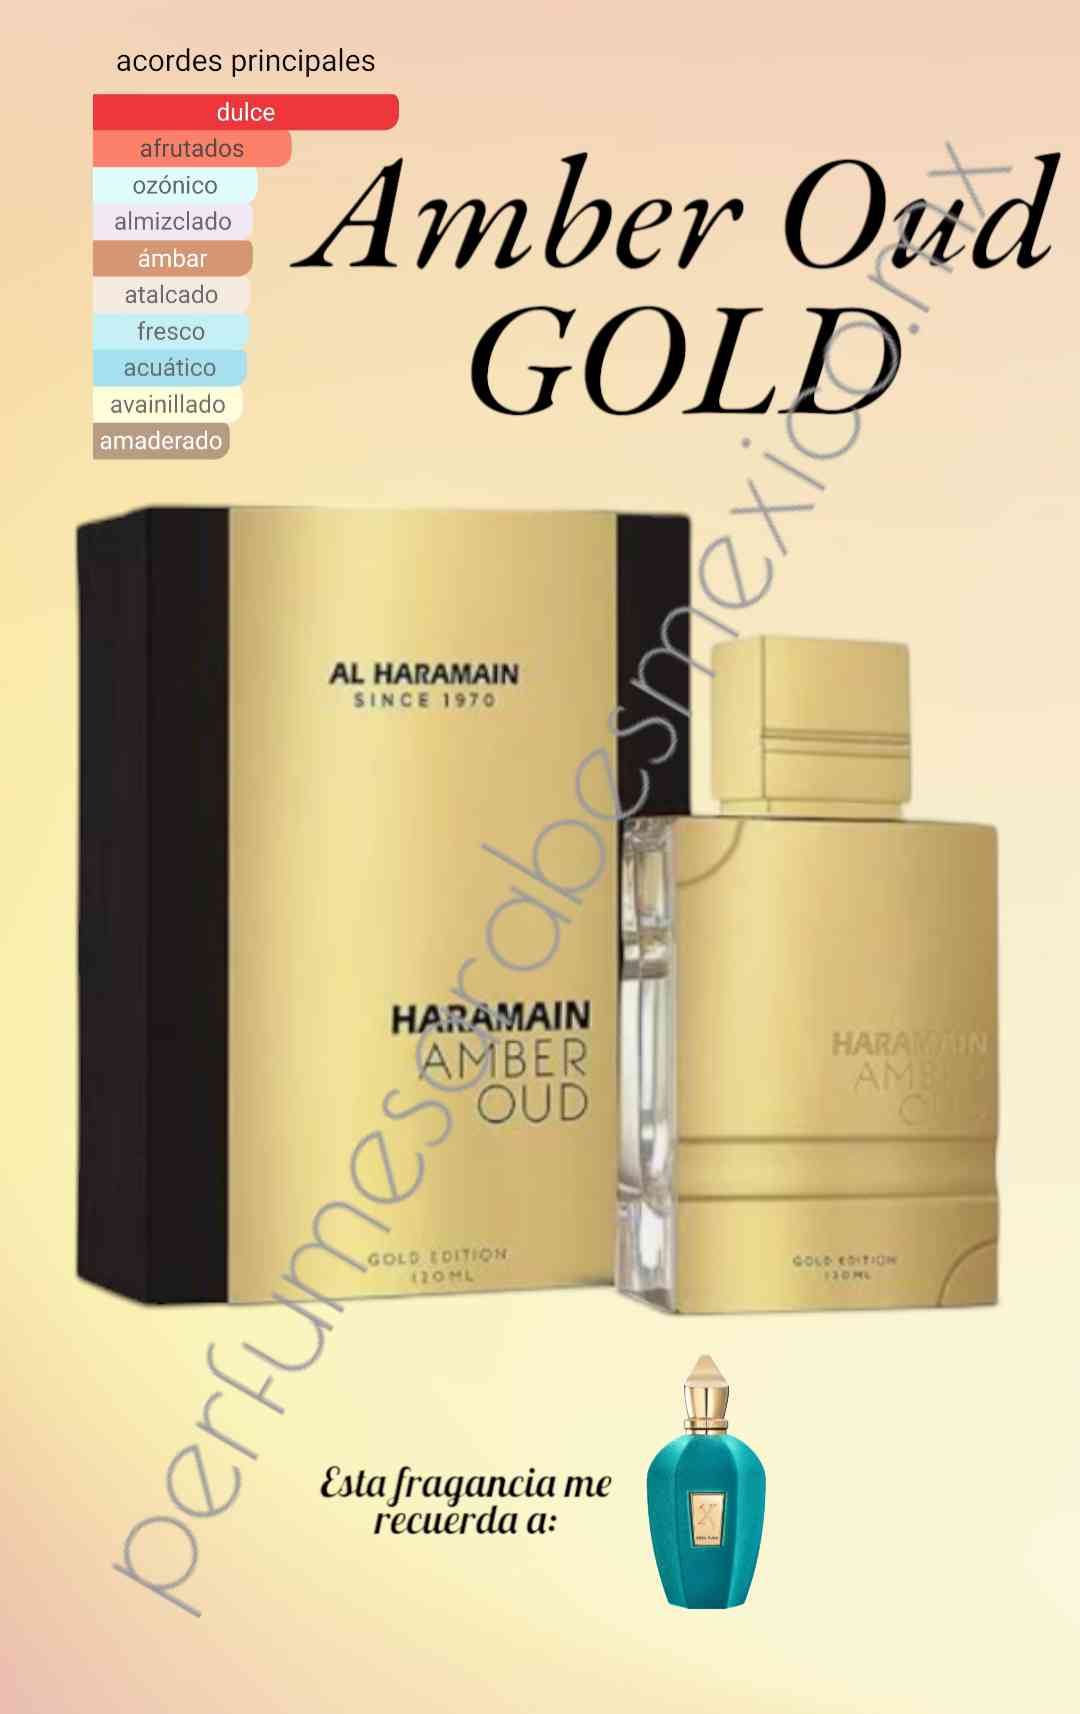 Amber Oud GOLD Edition by Al Haramain